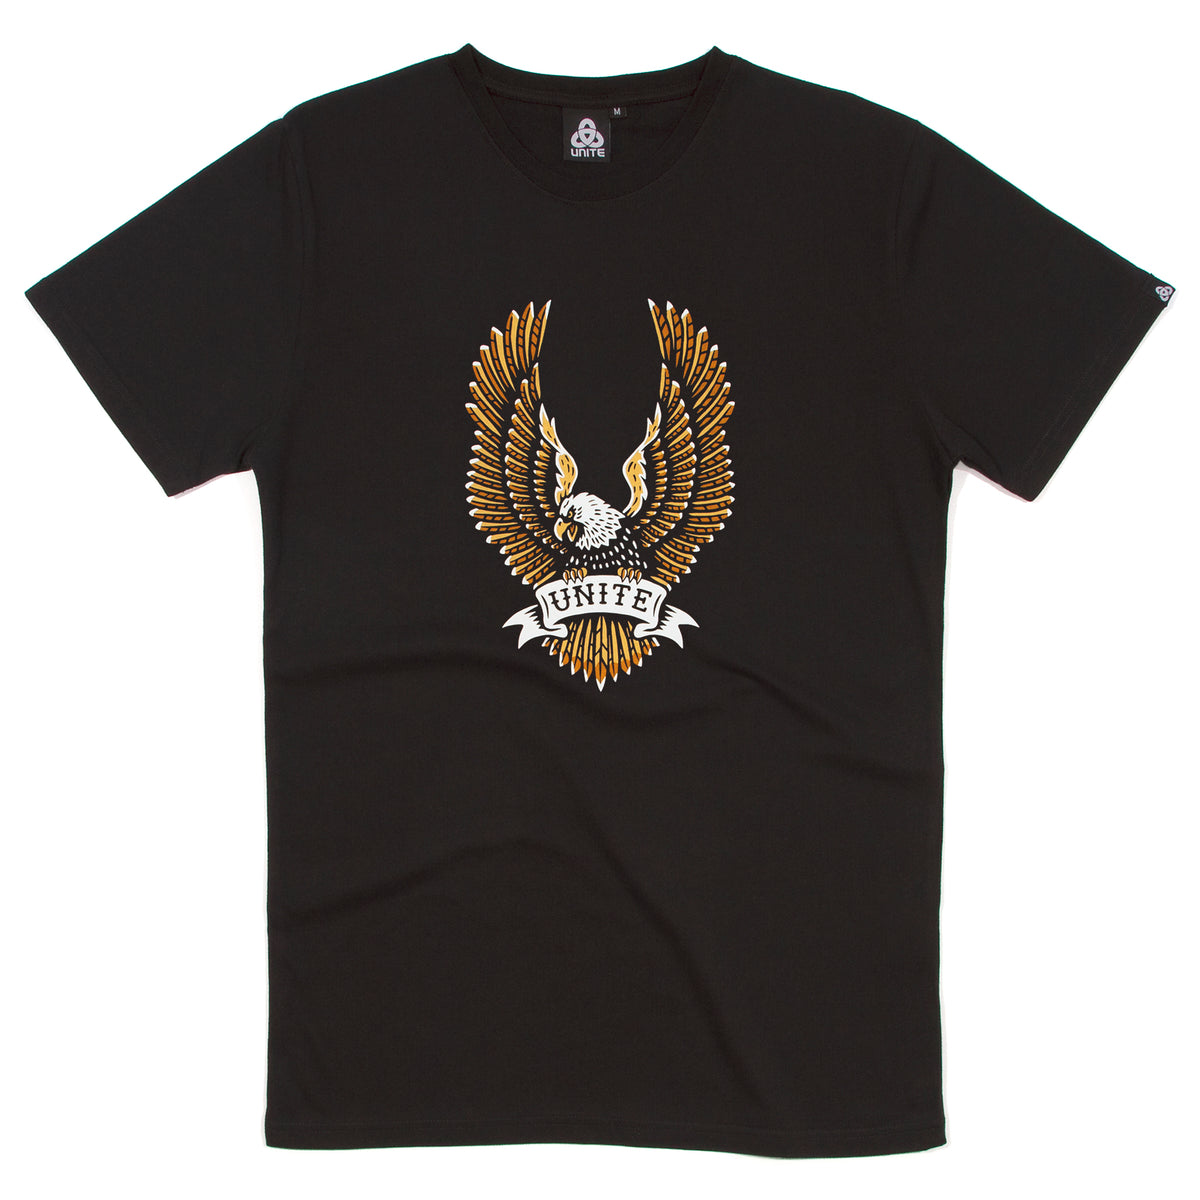 Unite Chopper T-Shirt